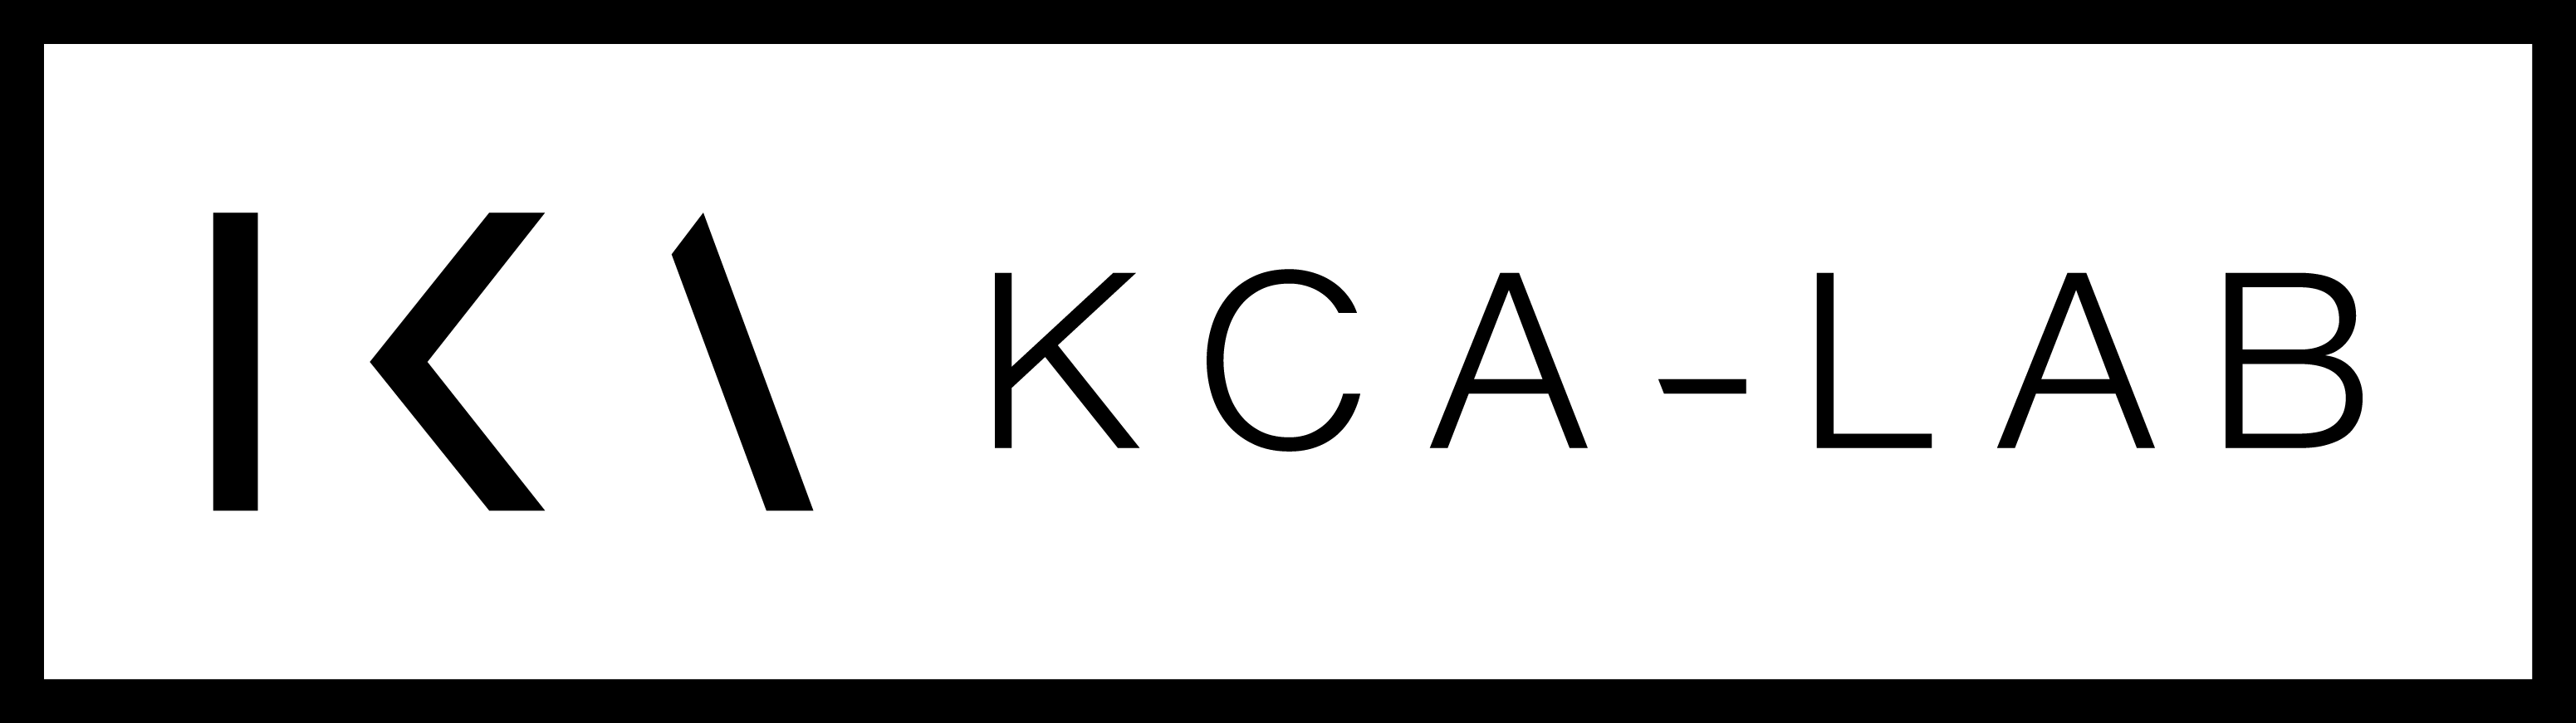 KCA Logo - Athleisure wear | KCA-Lab